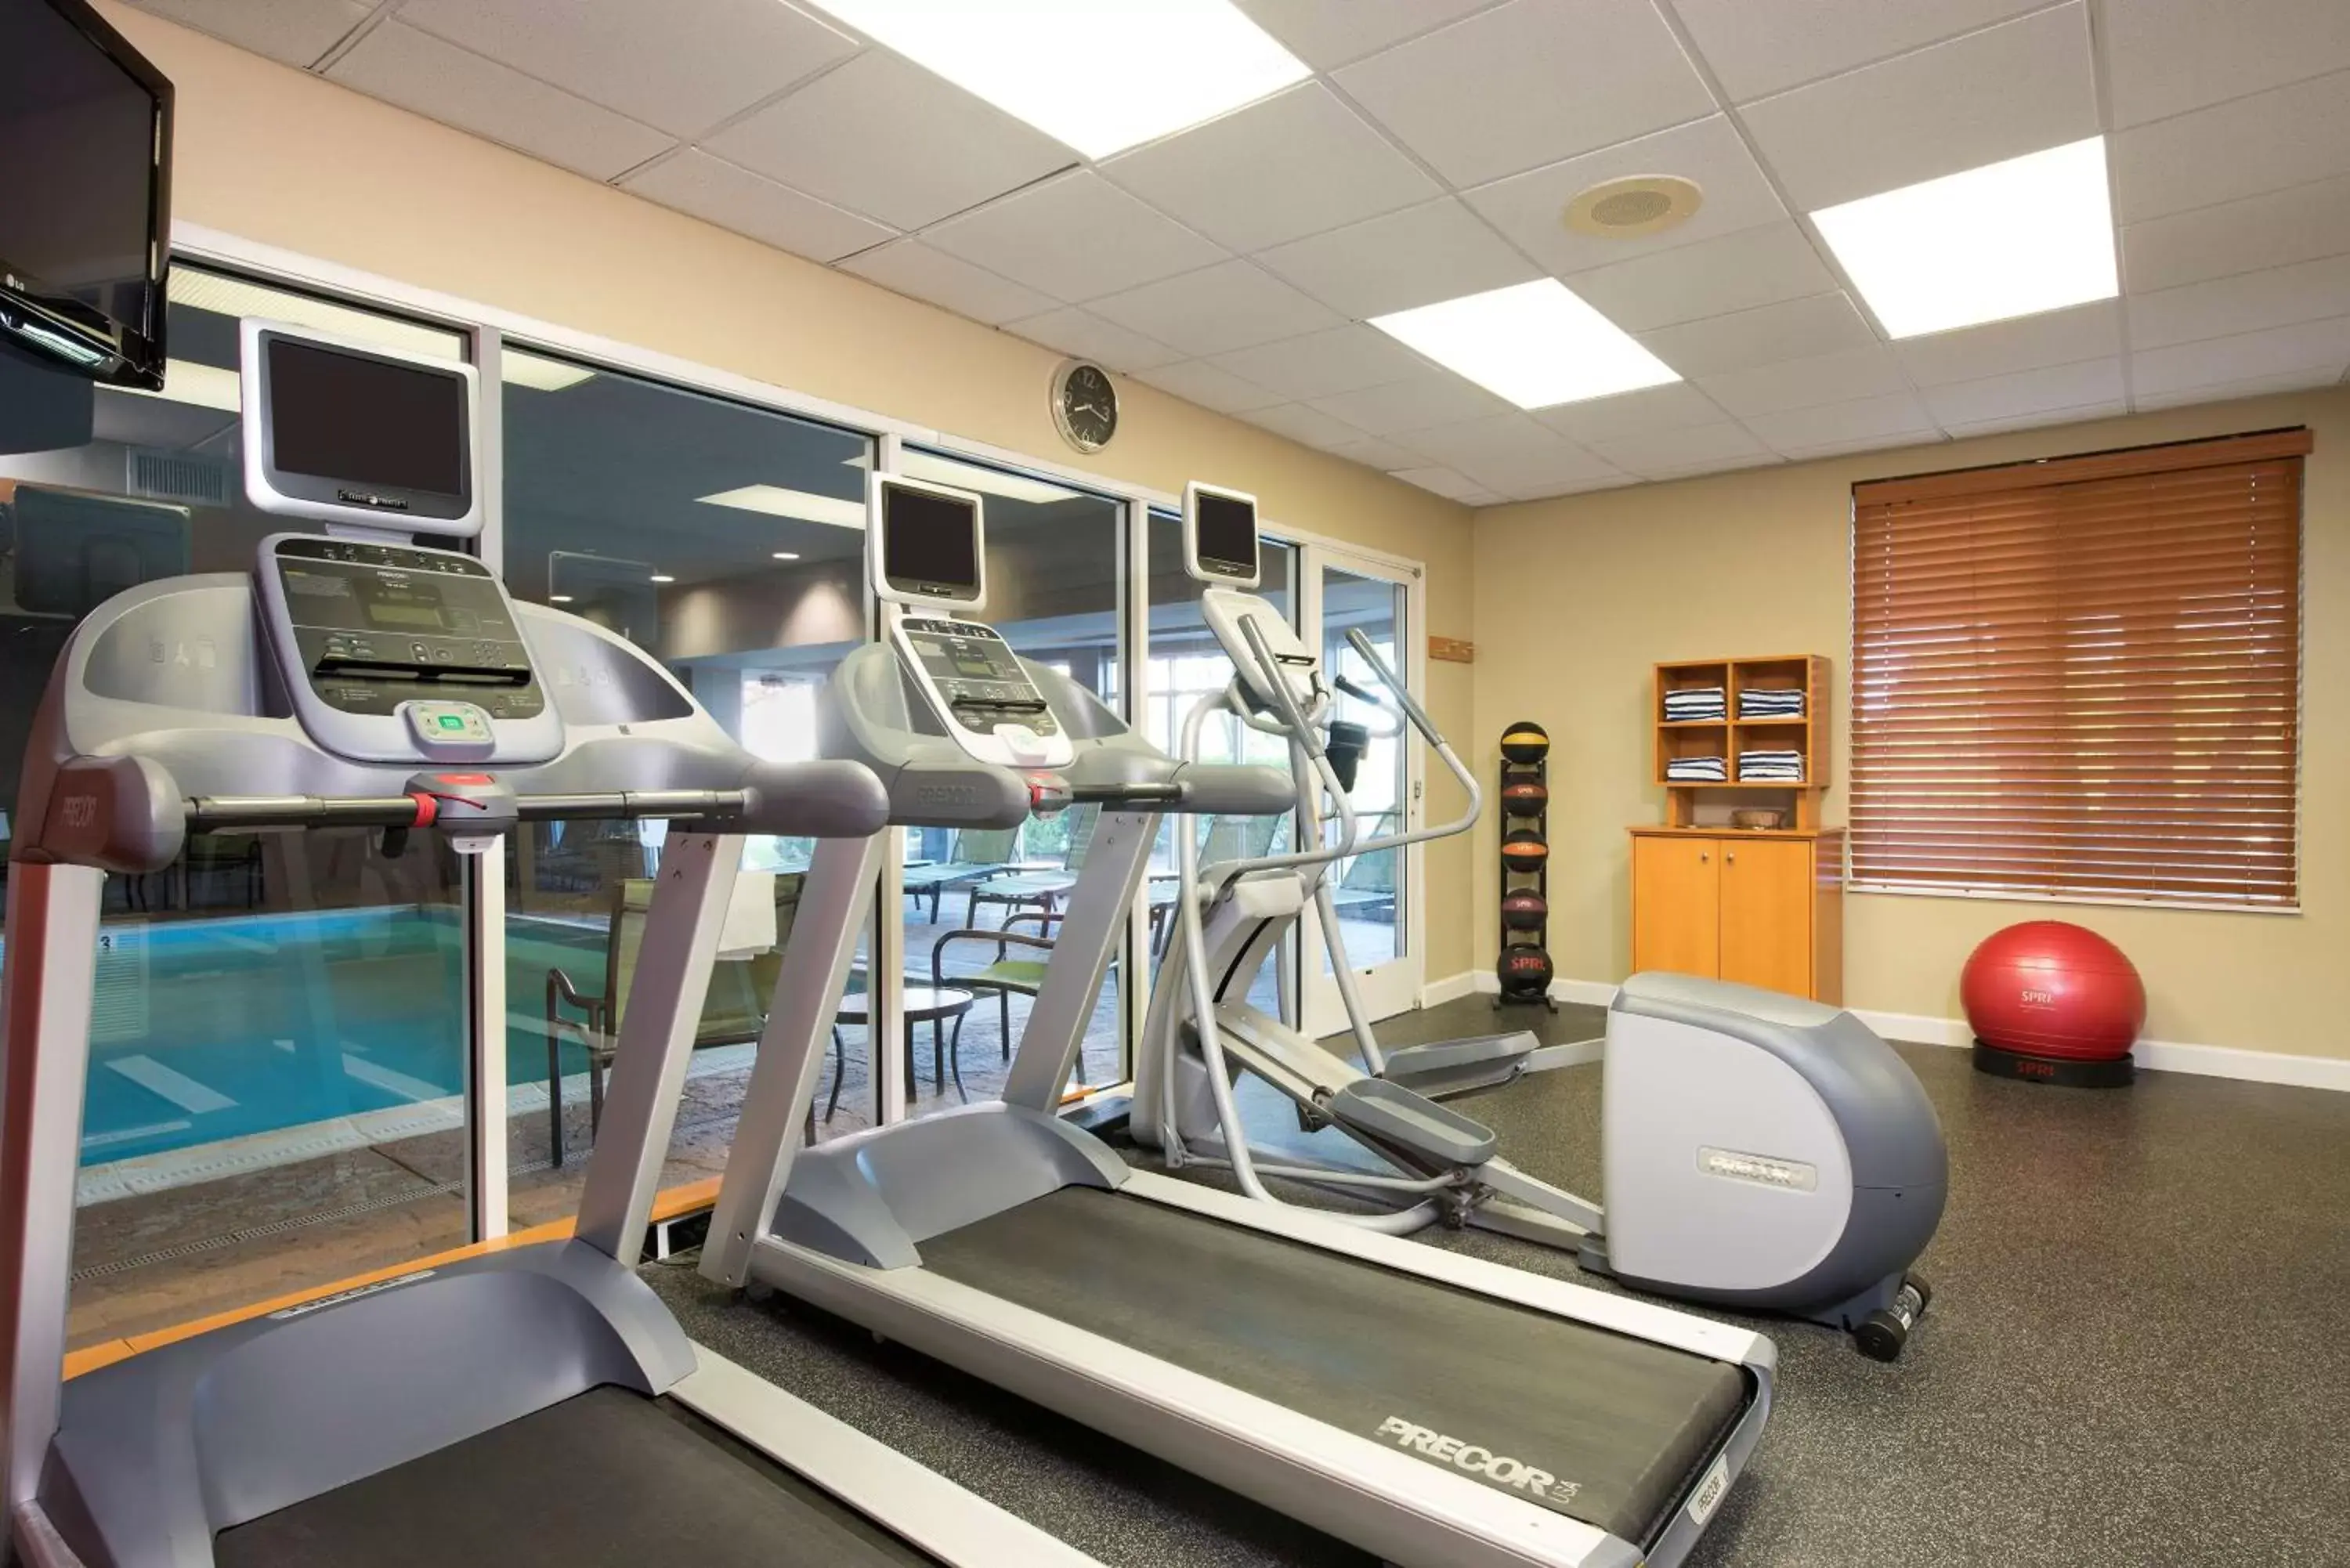 Fitness centre/facilities, Fitness Center/Facilities in Hilton Garden Inn Lexington